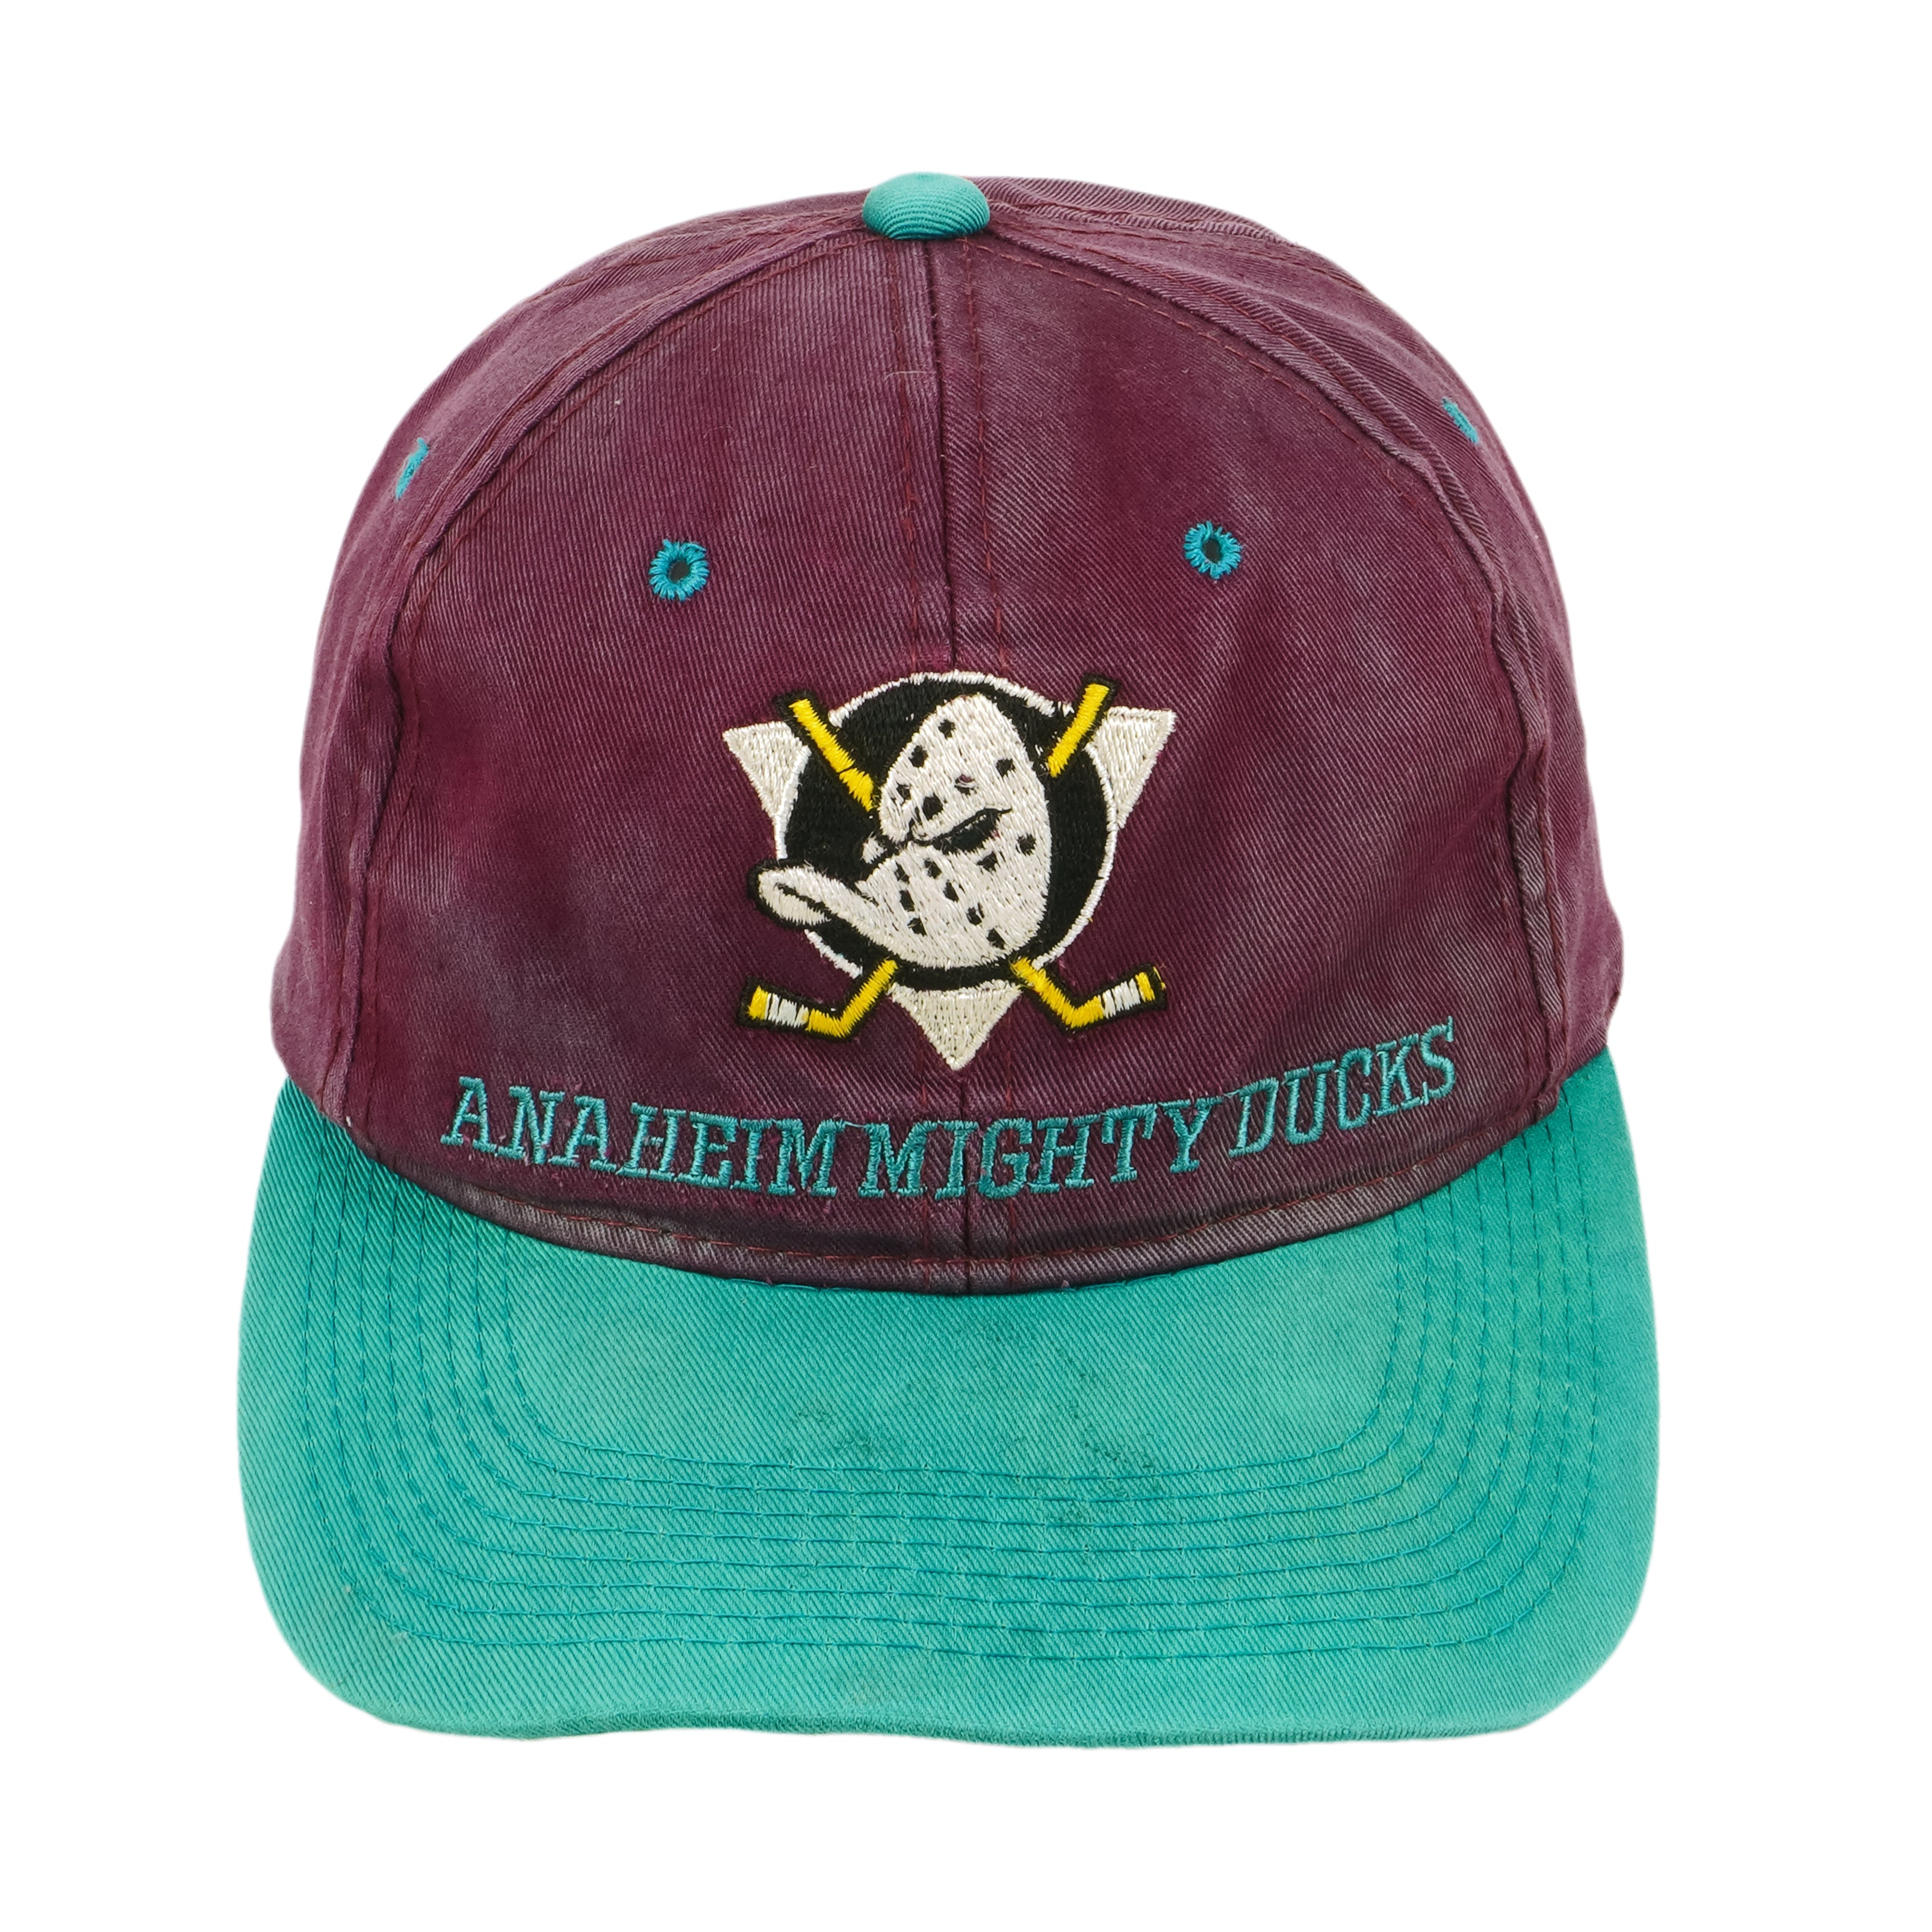 Vintage Anaheim Mighty Ducks Strapback dad hat cap rare 90s NHL hockey  deadstock